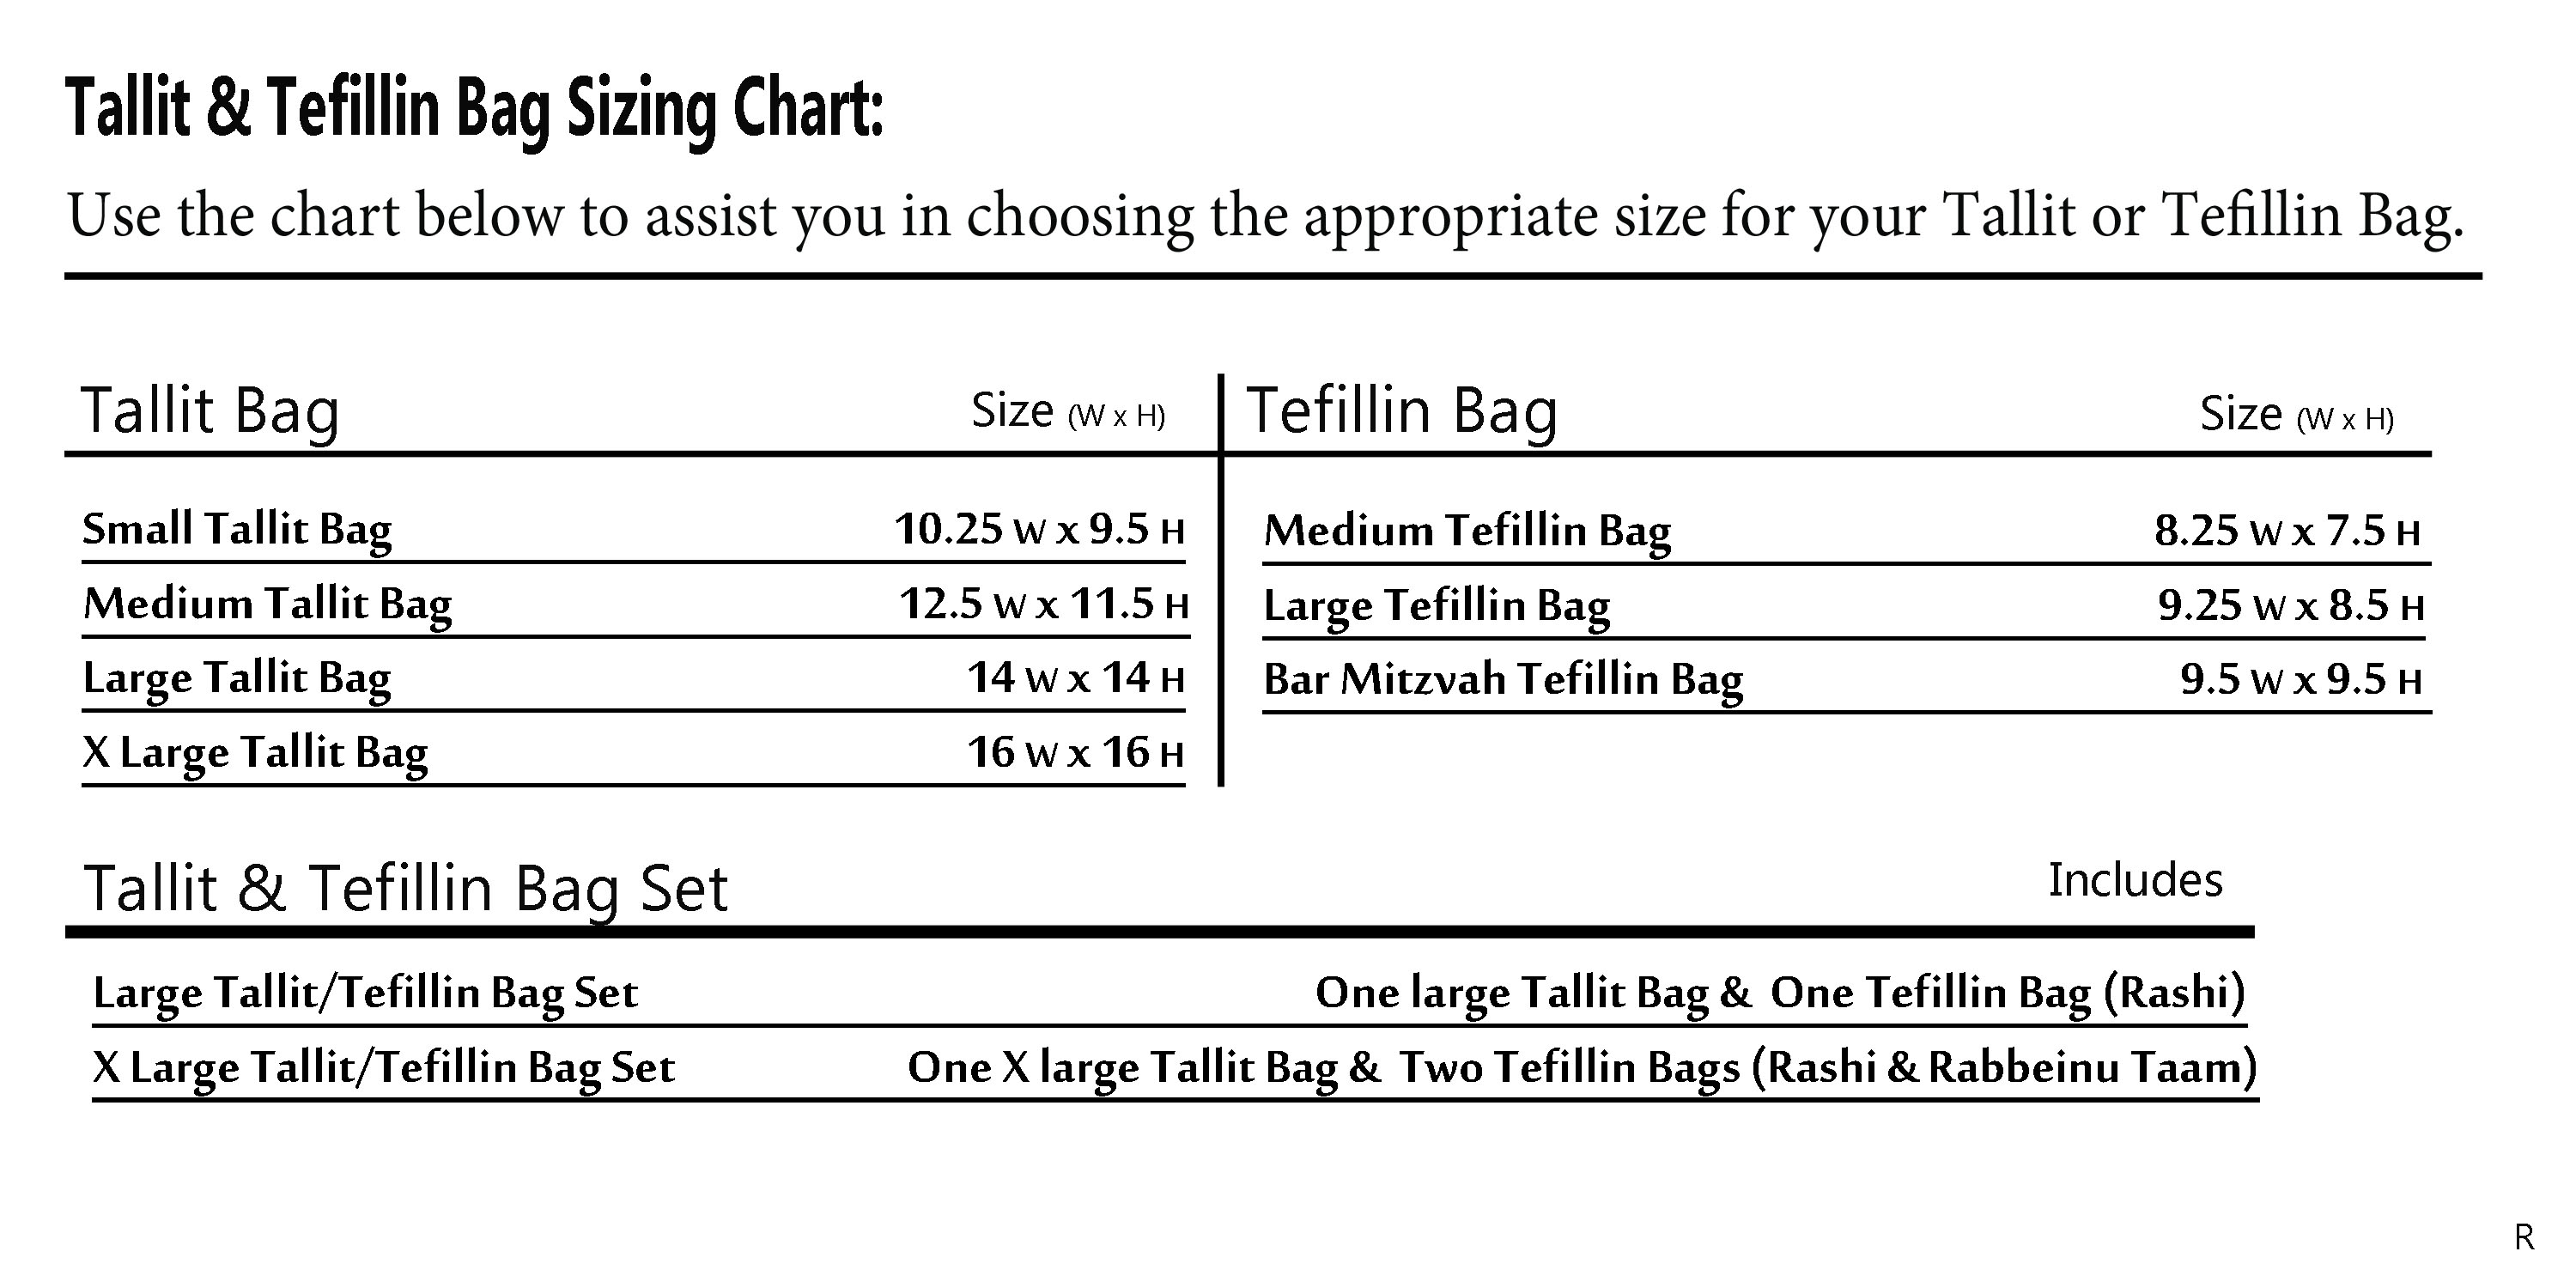 tallit bag size chart-R.jpg